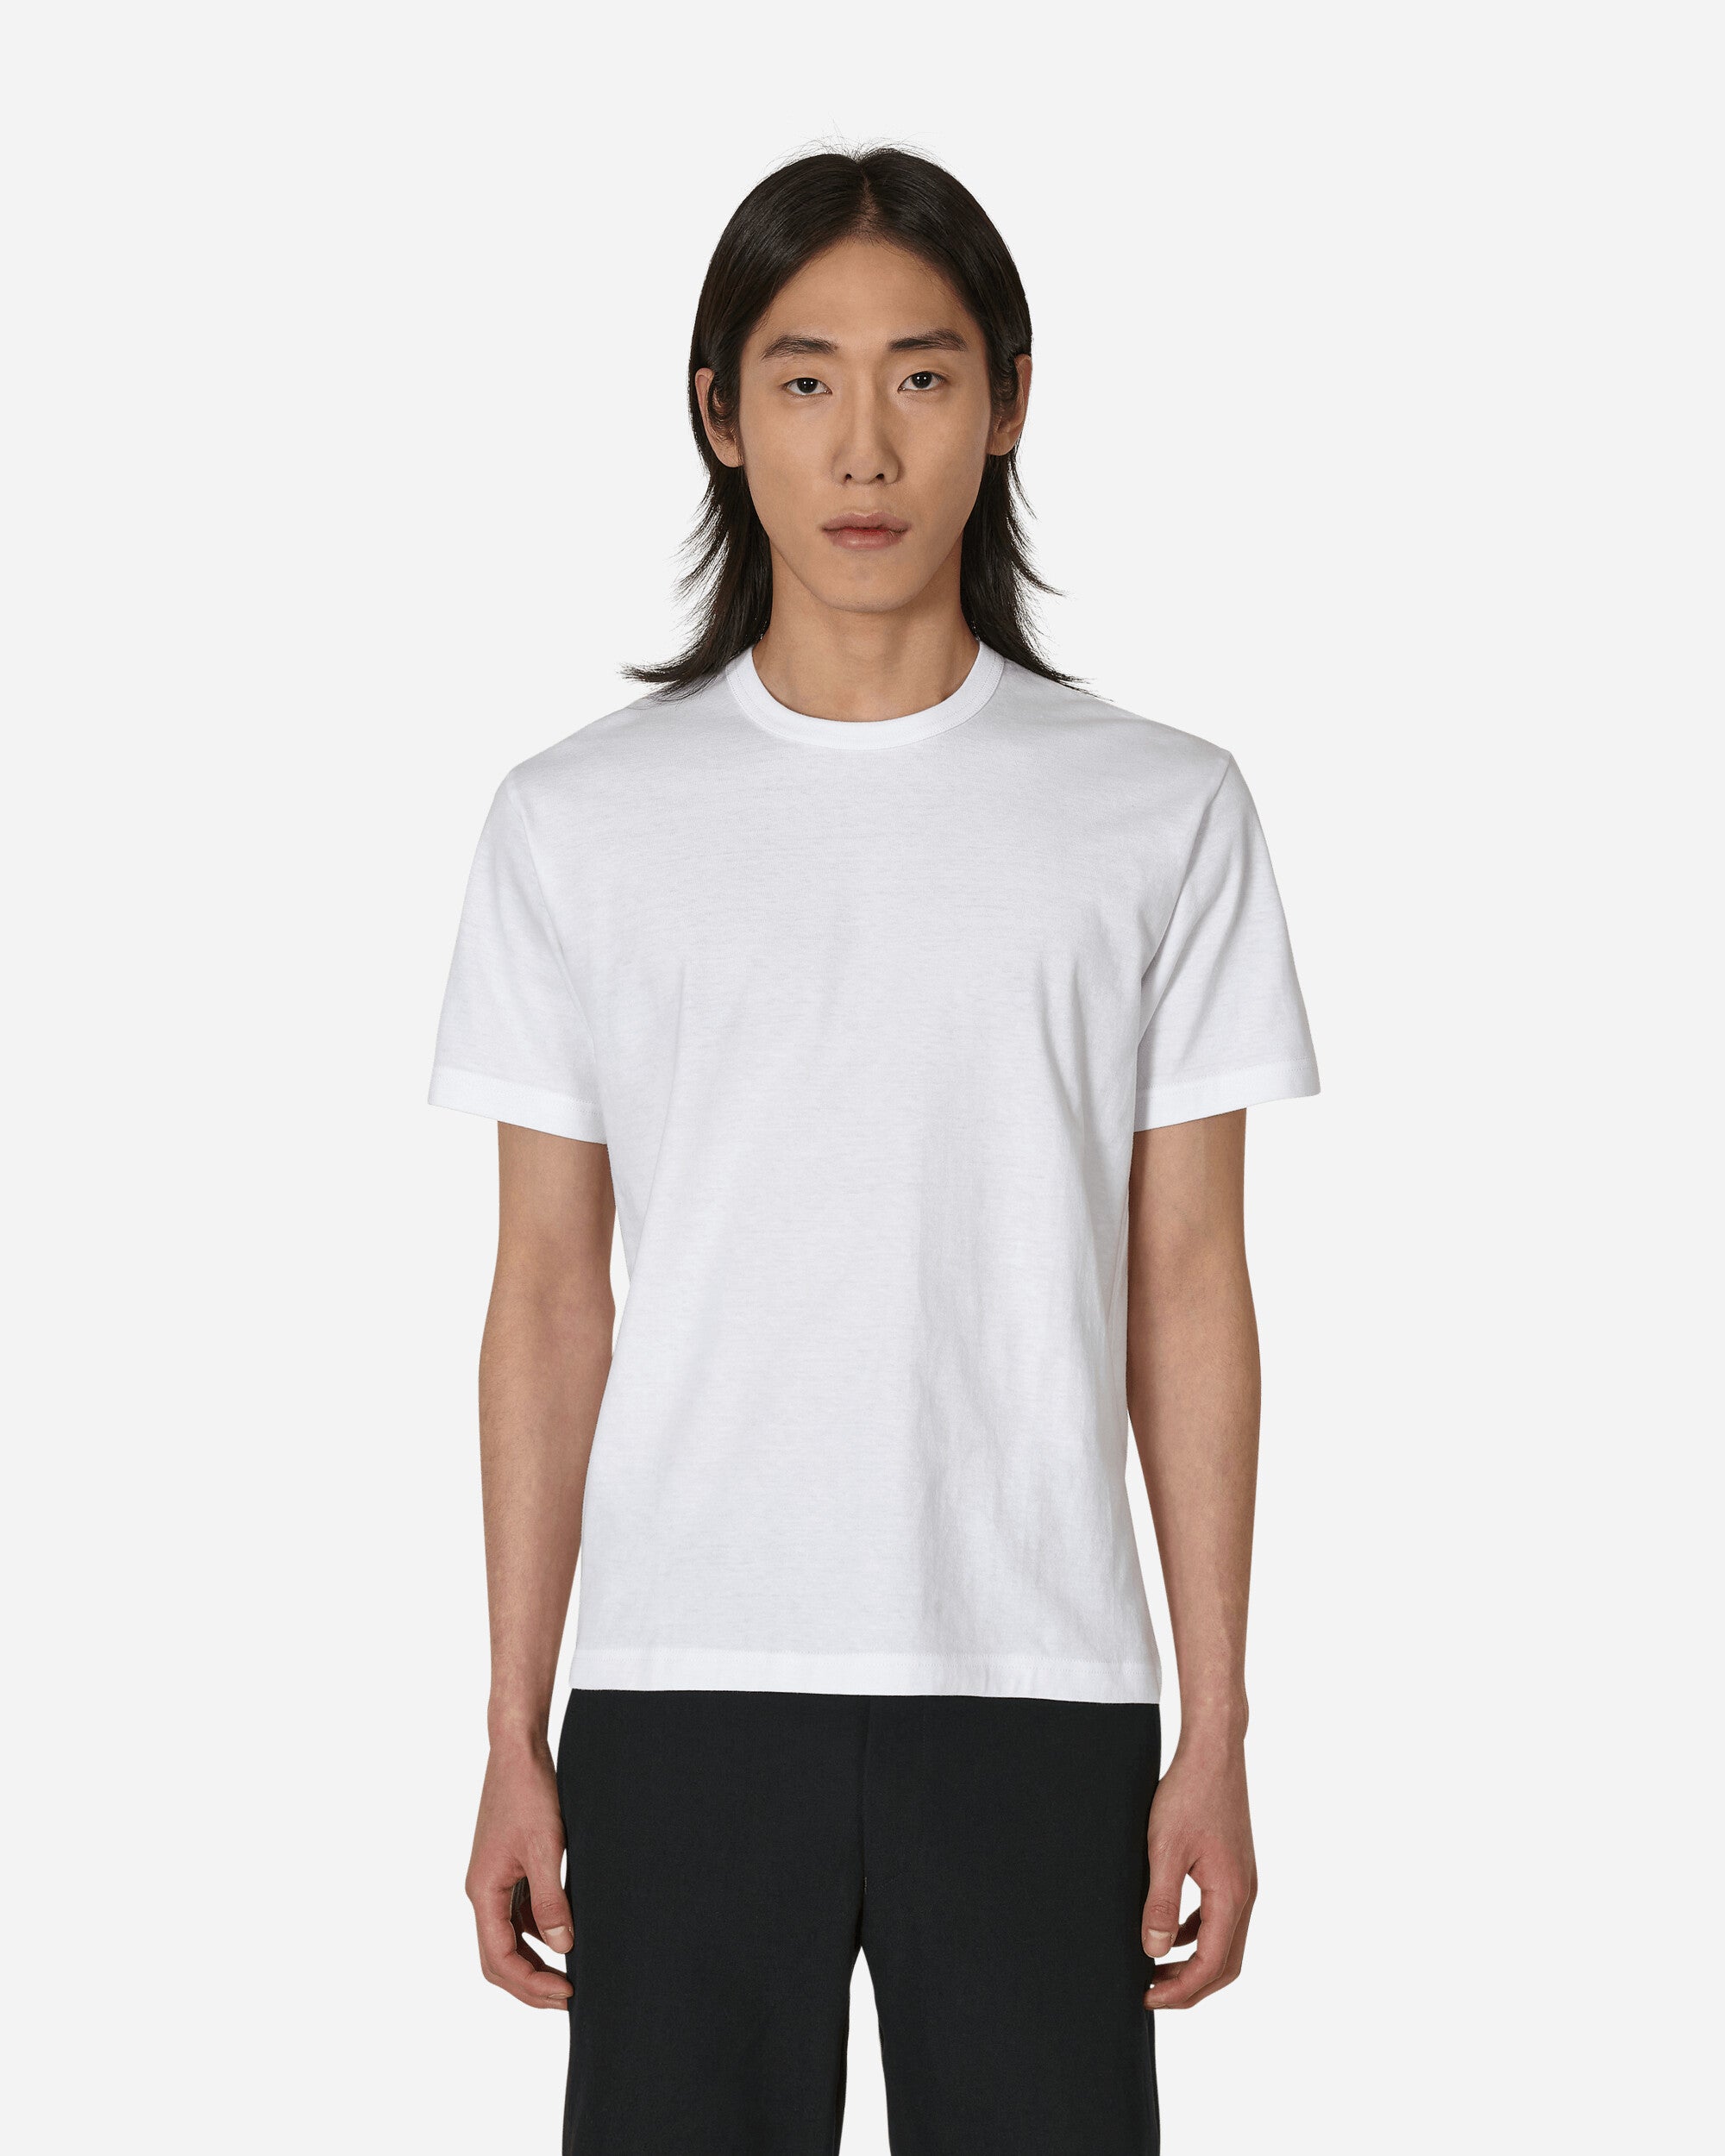 Nike Message Print T-Shirt White